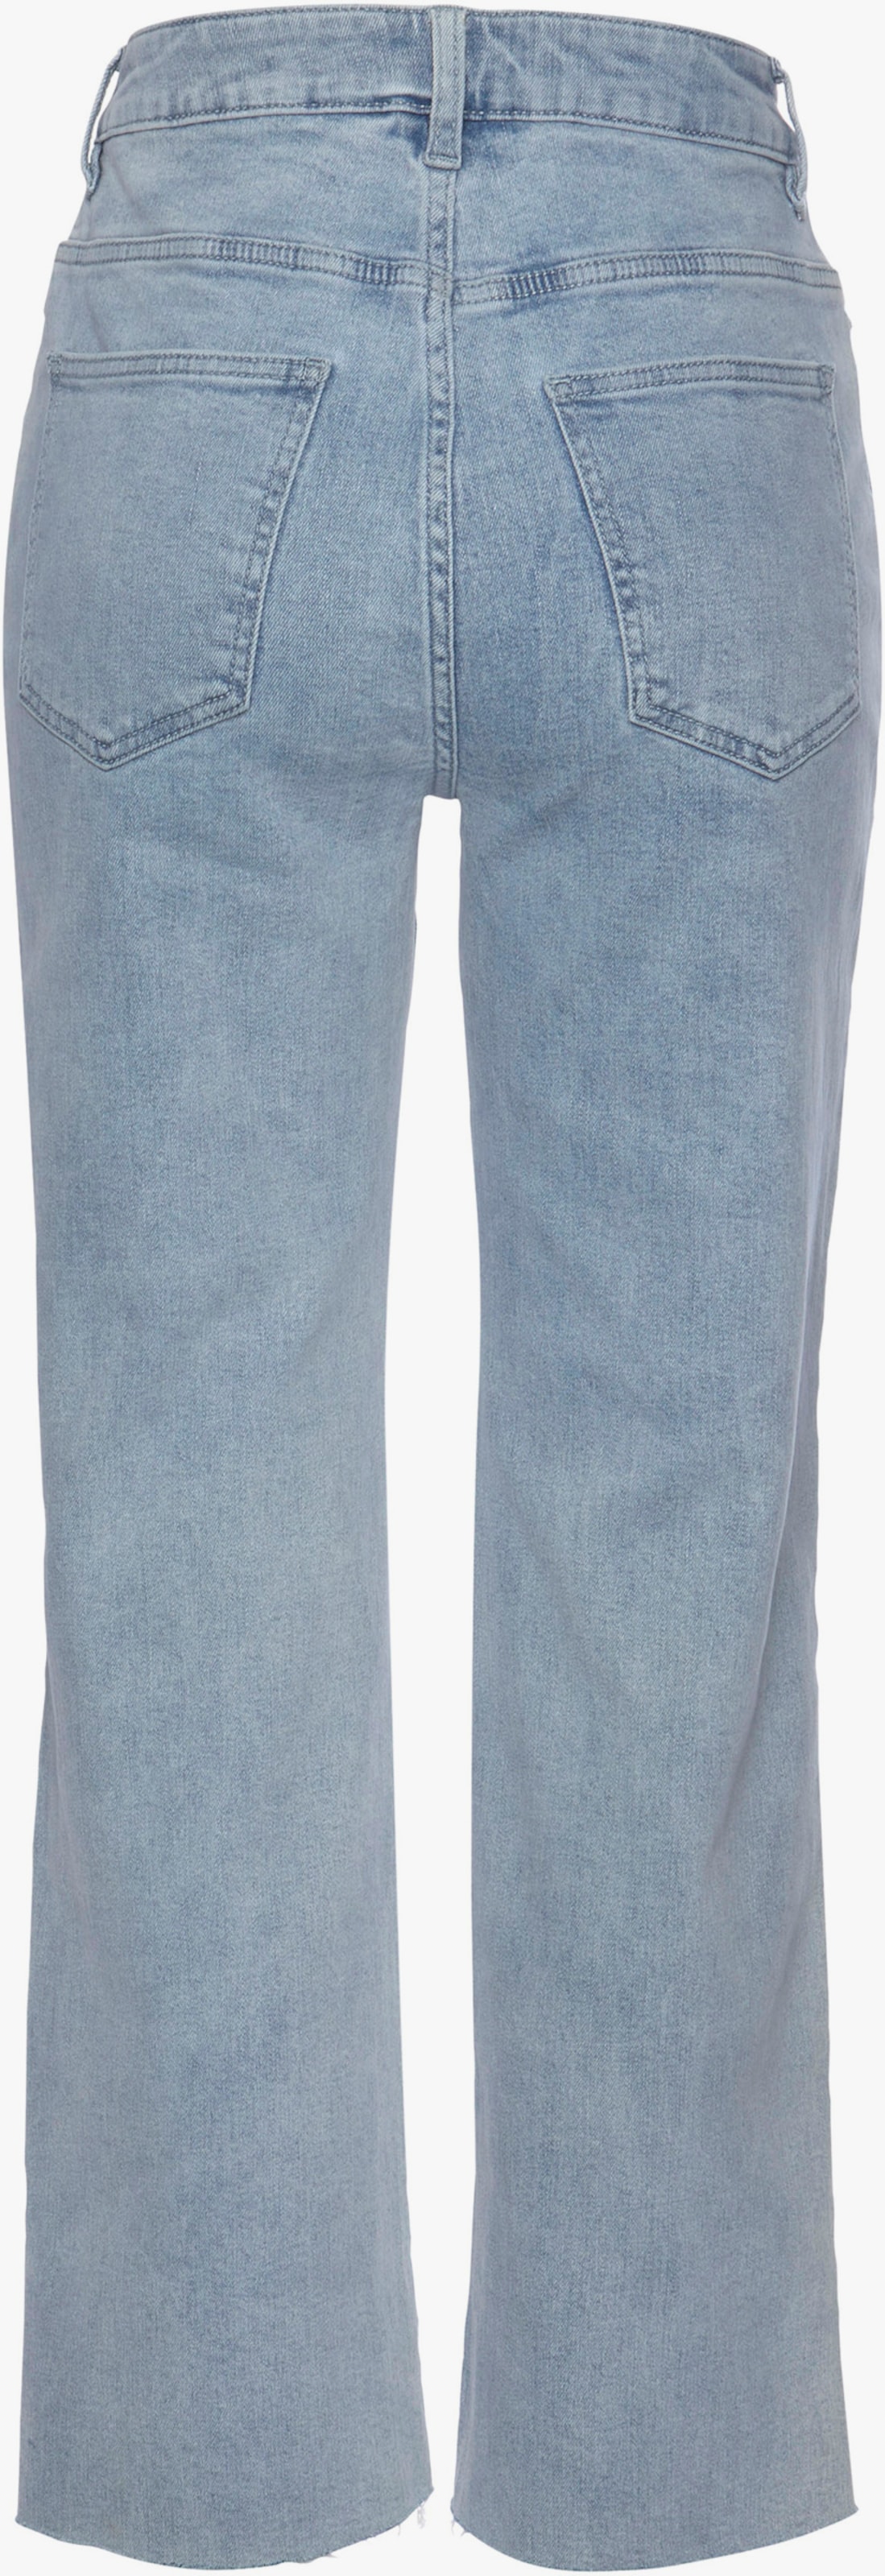 Buffalo Weite Jeans - light-blue-washed